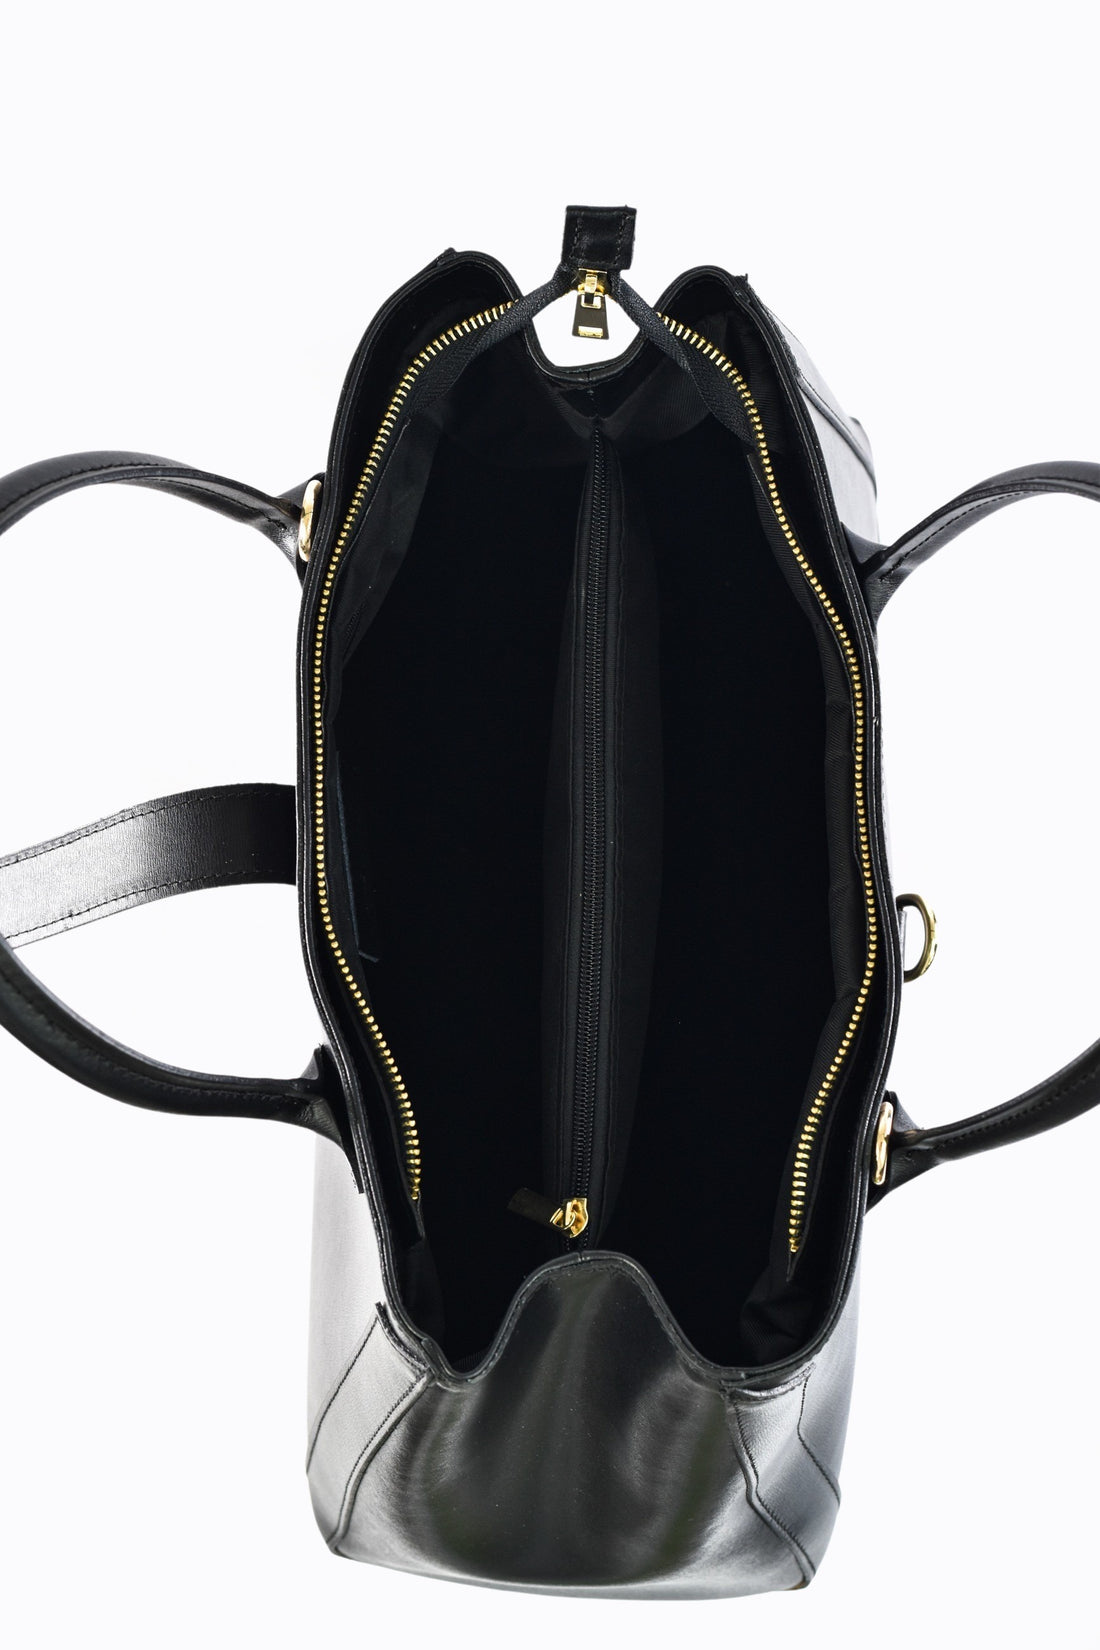 Chloe bag in black brushed leather